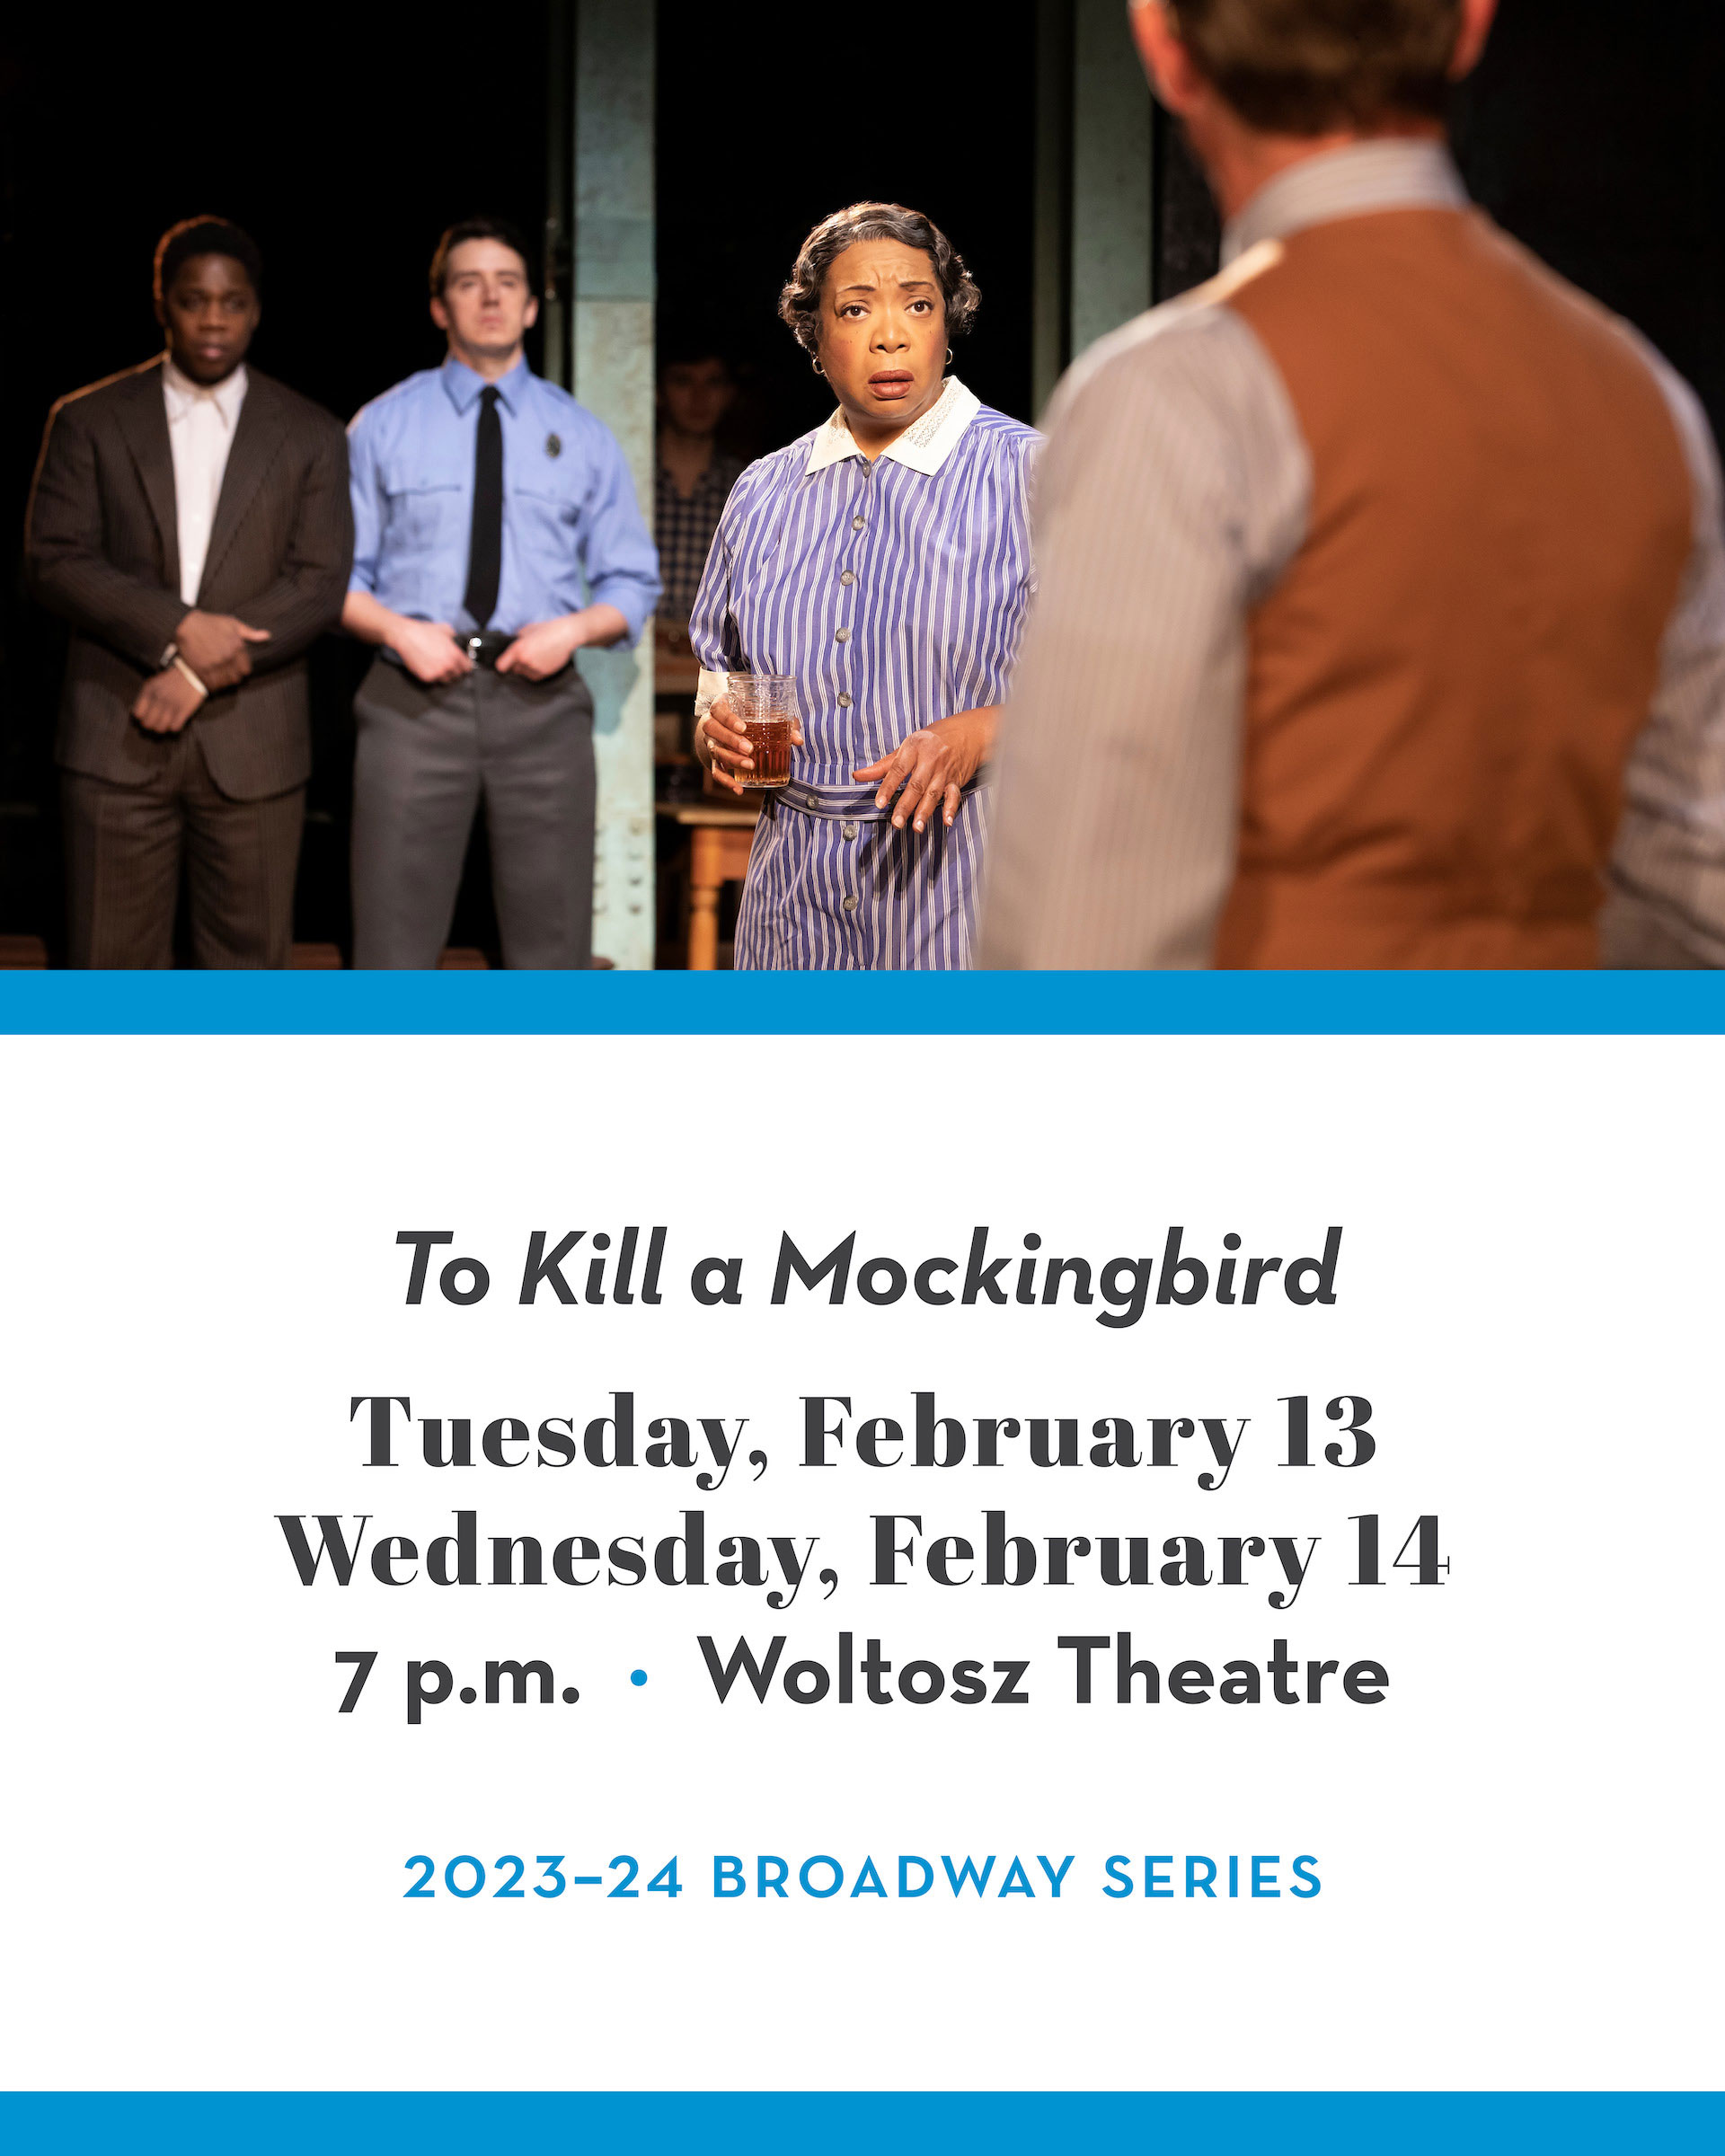 Aaron Sorkin's To Kill a Mockingbird is energetic but unfocused